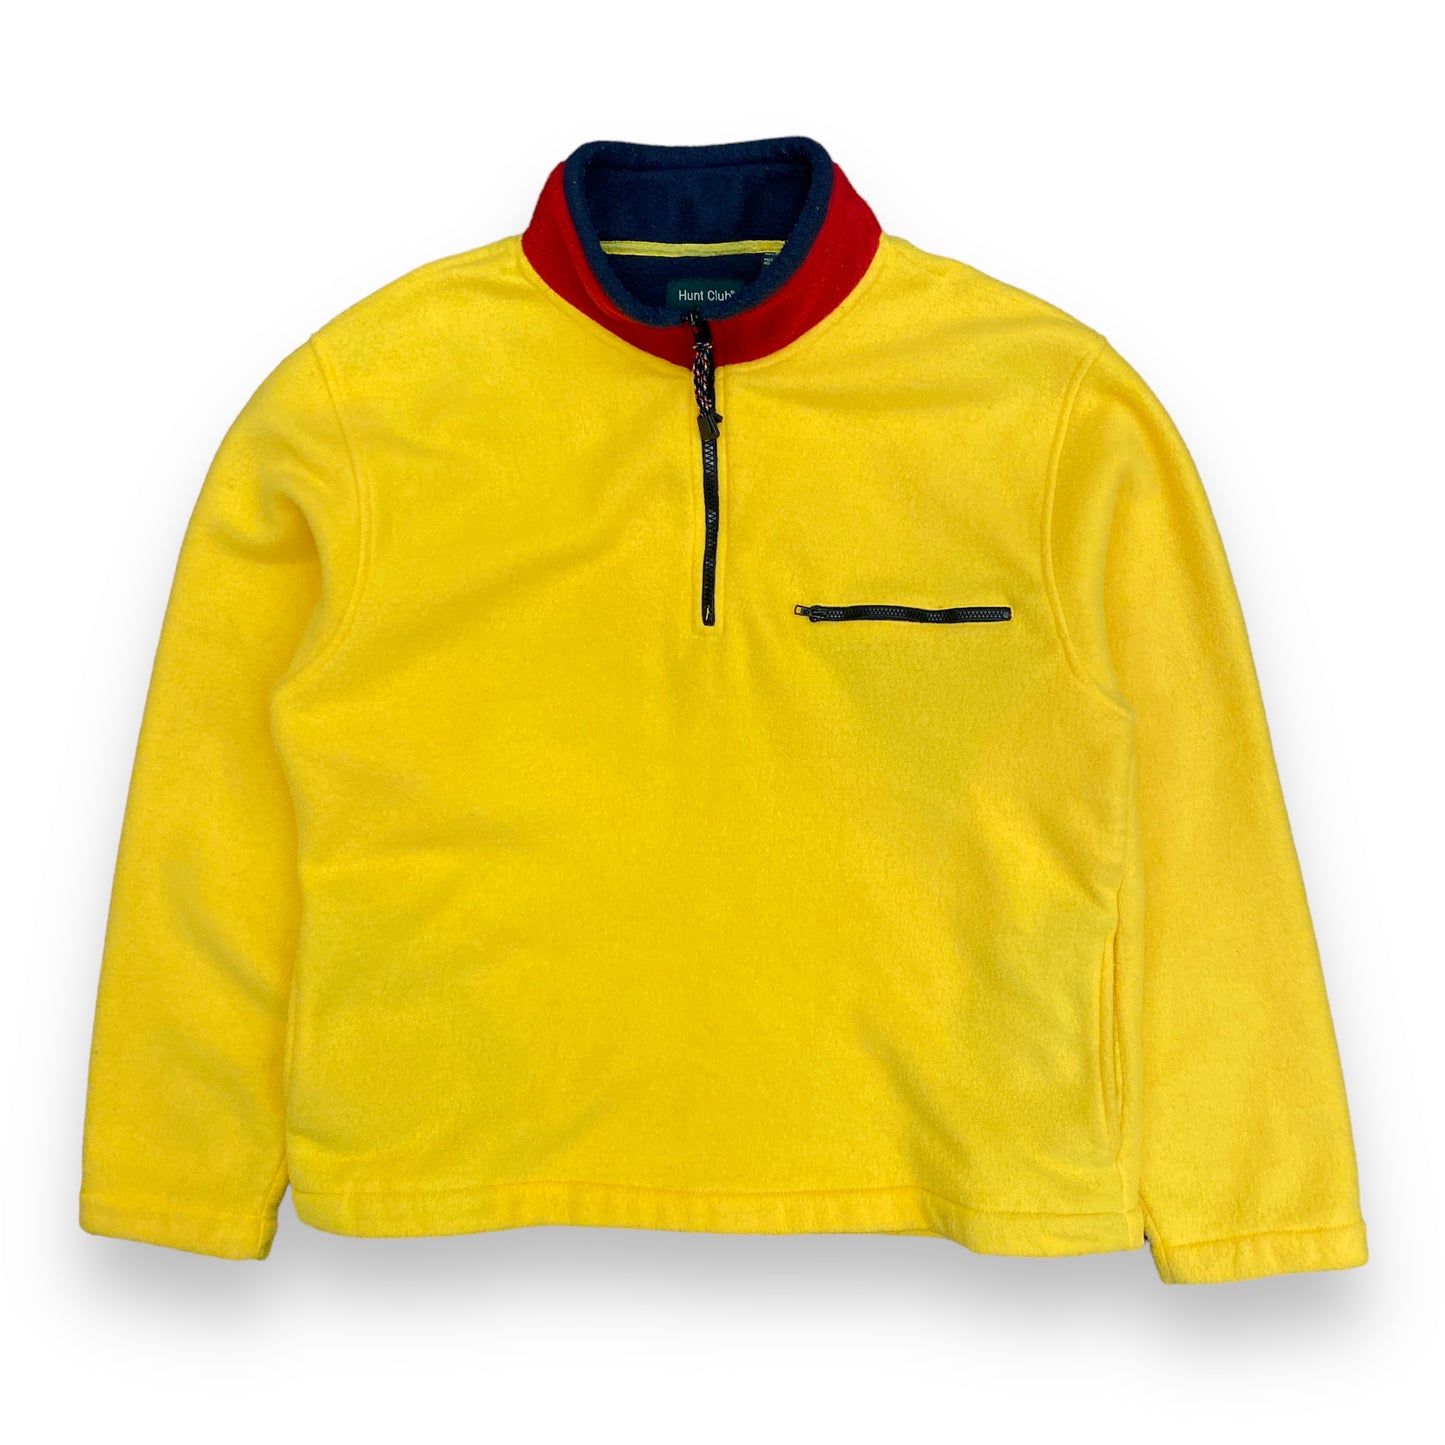 1990s Hunt Club Yellow Fleece Quarter Zip - Size Large